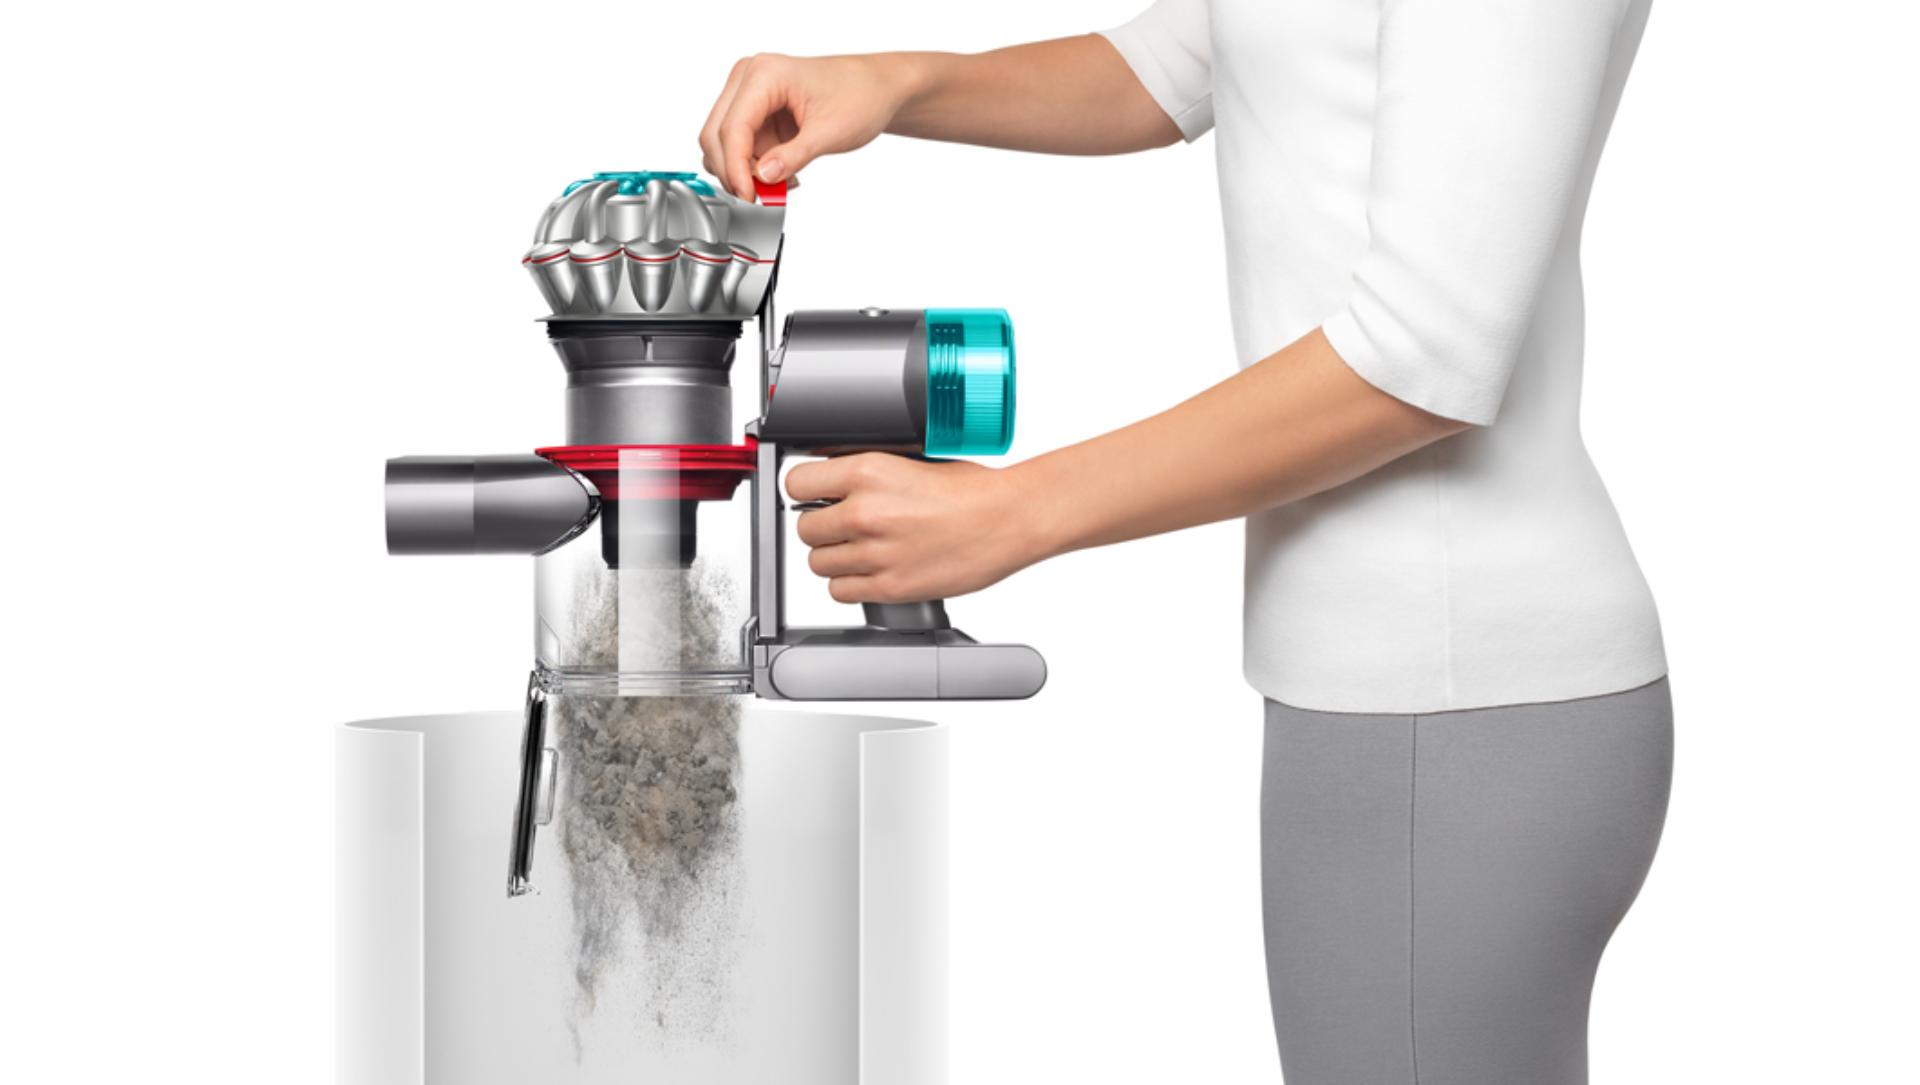 Woman emptying a Dyson V8 vacuum